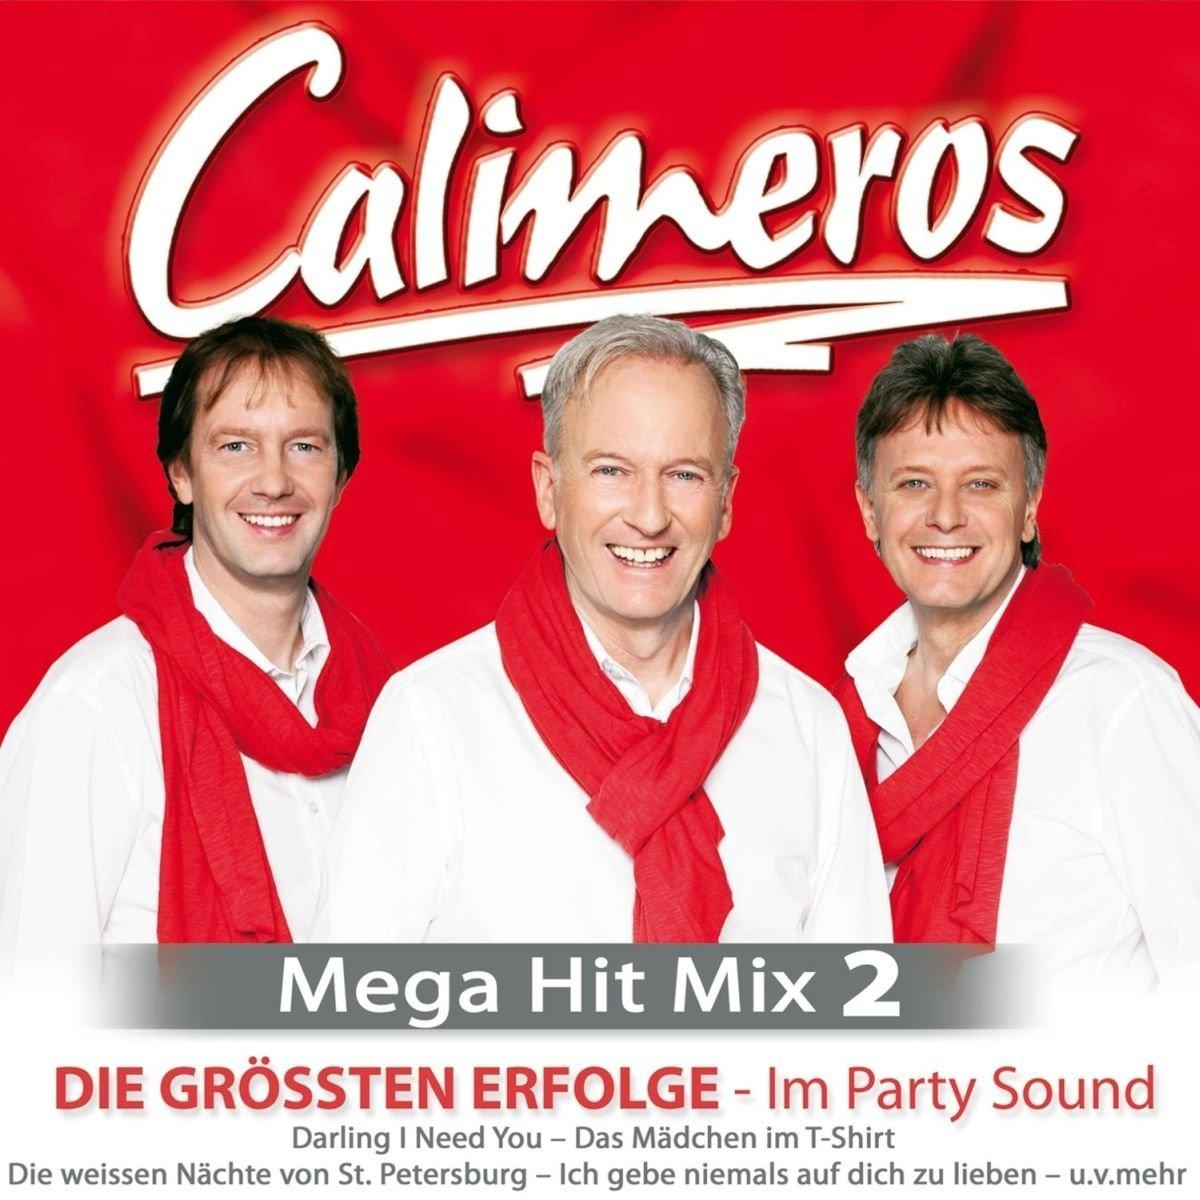 - Mega 2-Die Mix E Calimeros größten Hit - (CD)